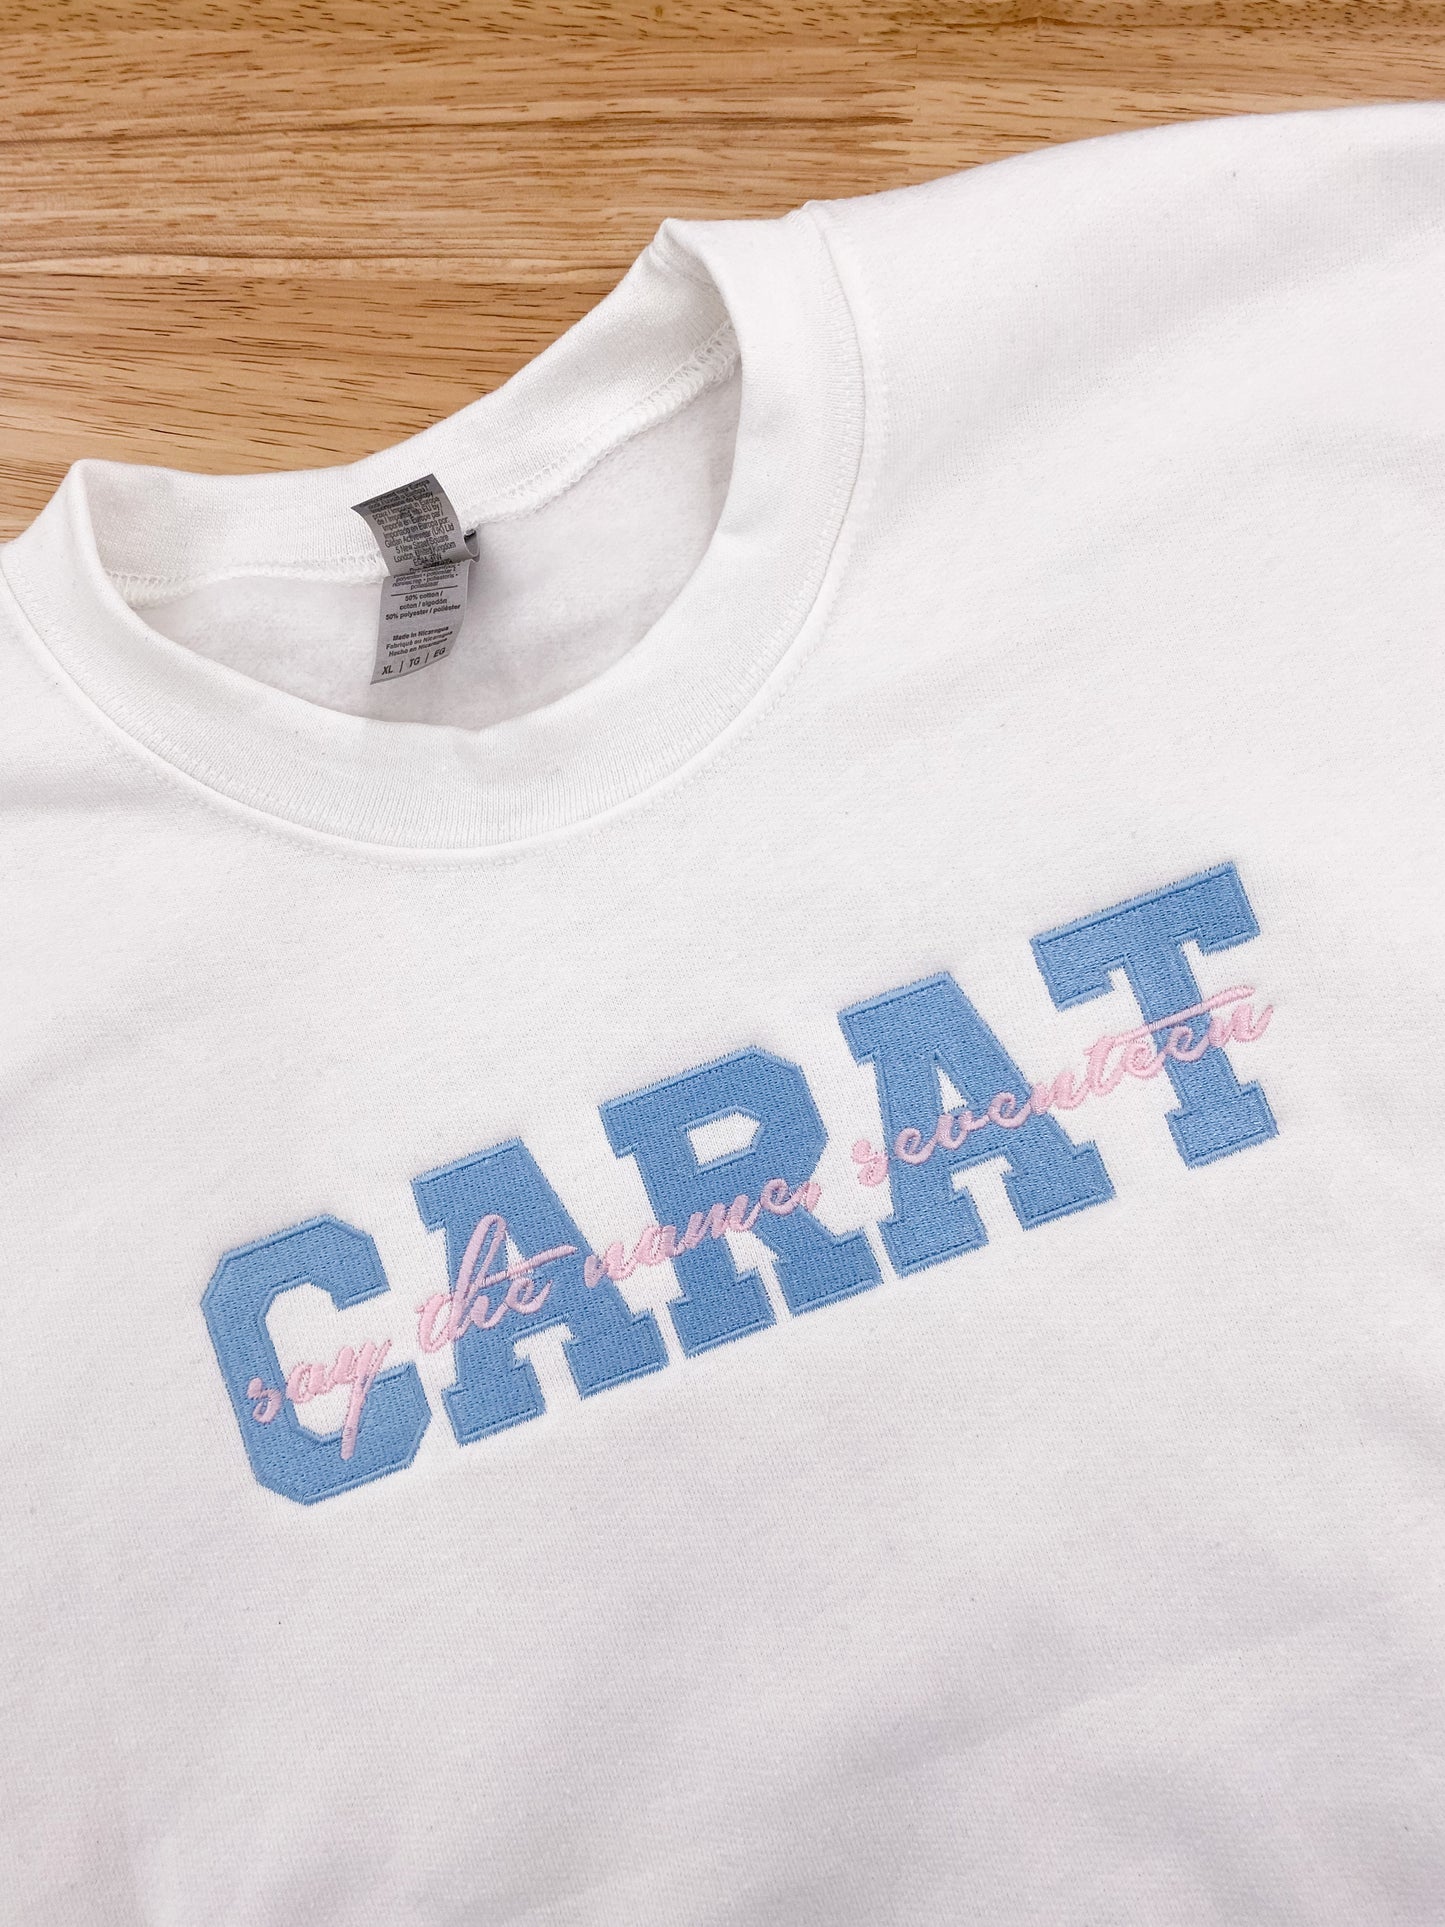 Carat Embroidered Crewneck Sweatshirt